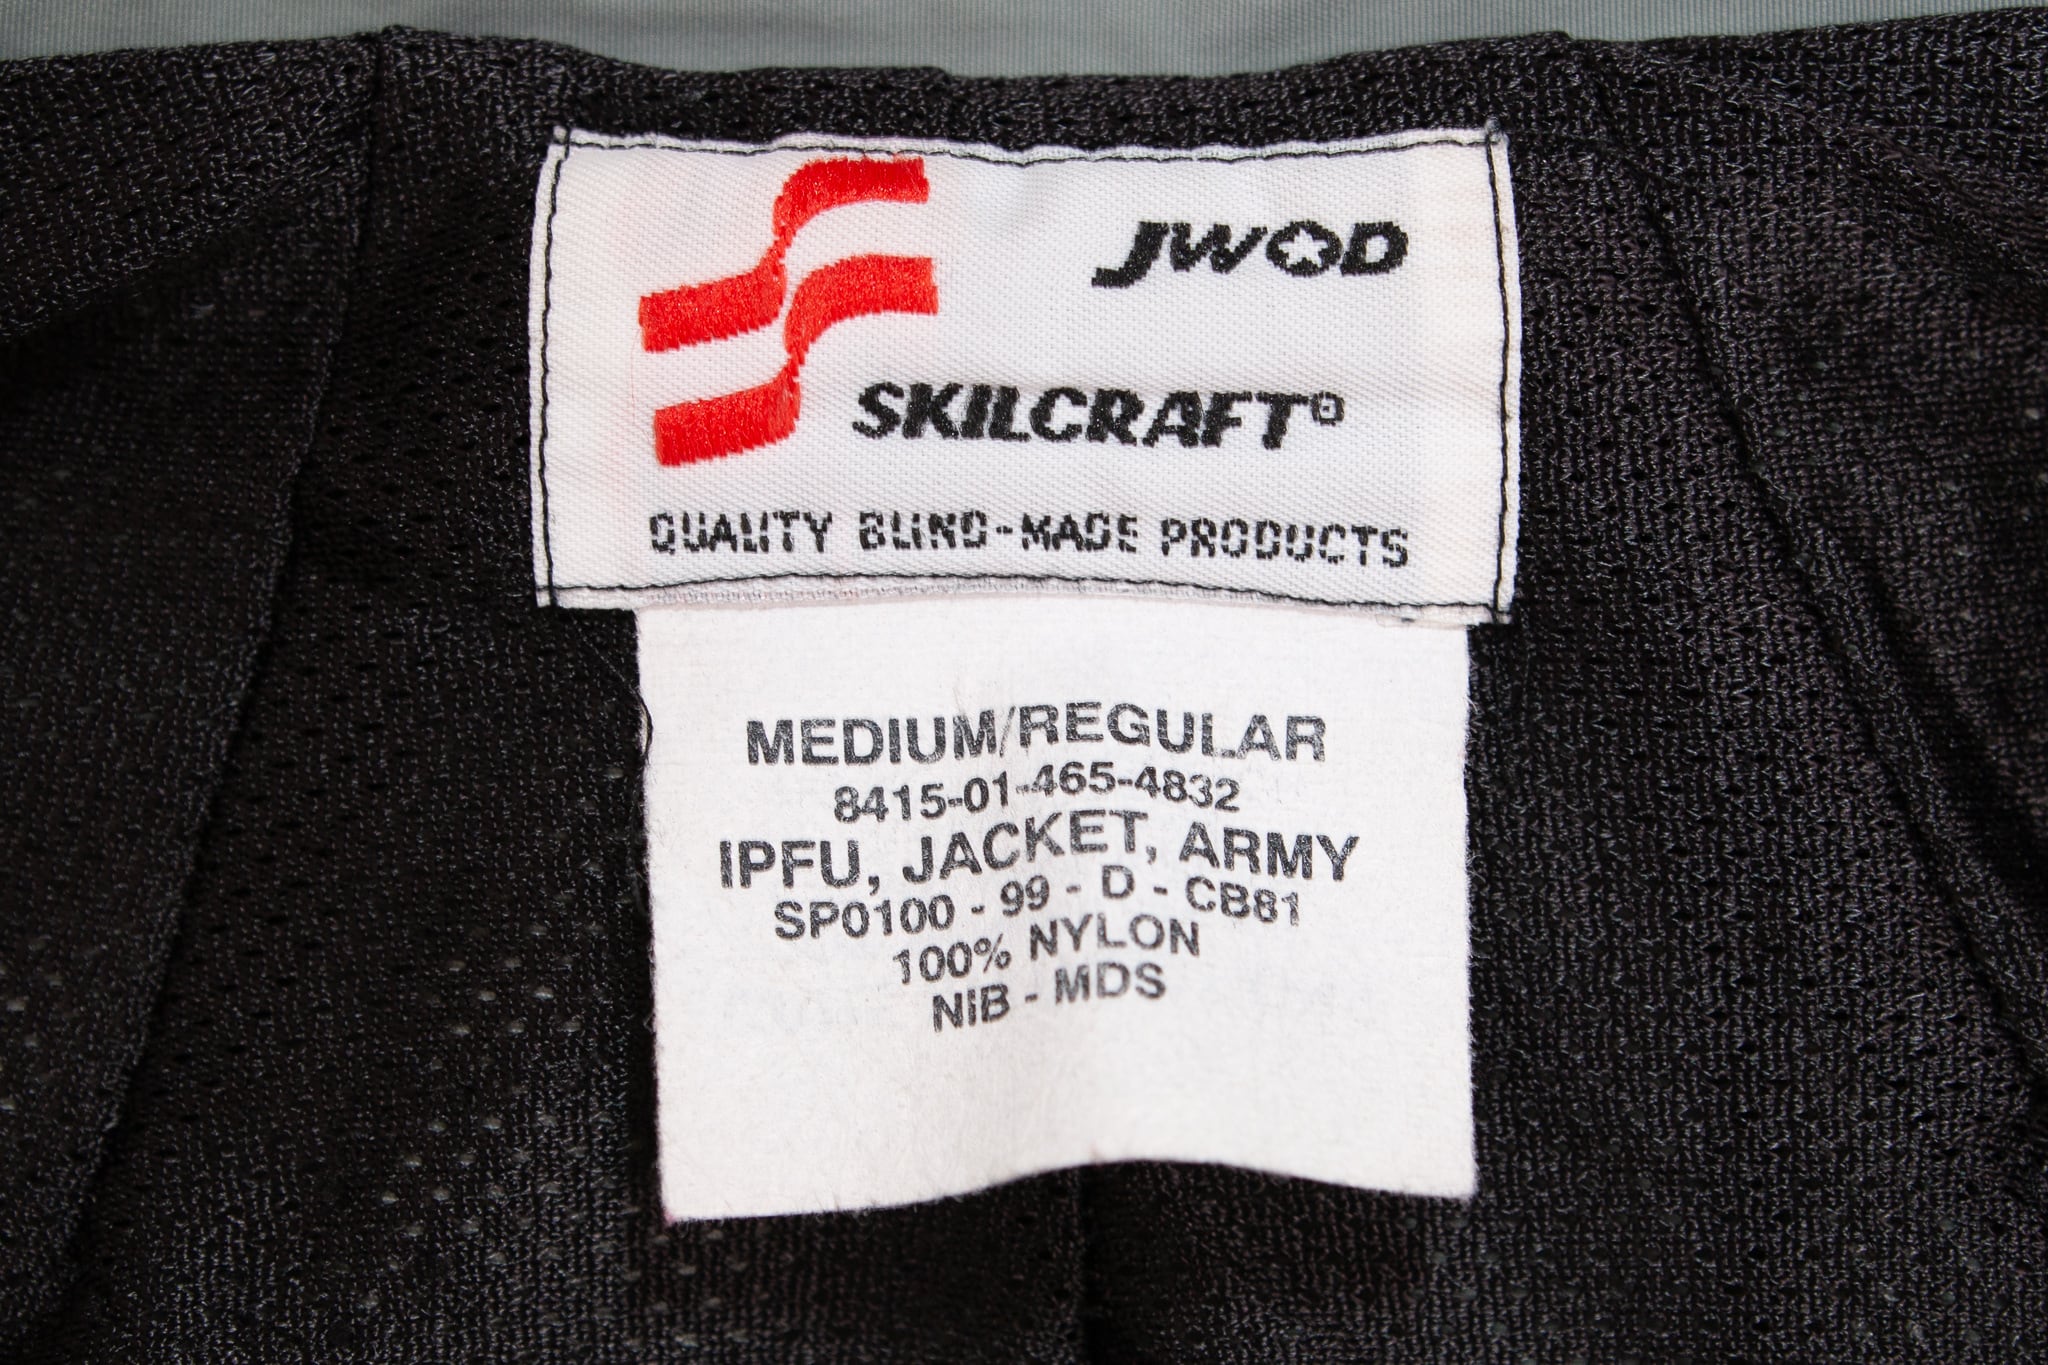 U.S.Army Improved Physical Fitness Uniform Jacket "USED" 米軍 IPFU